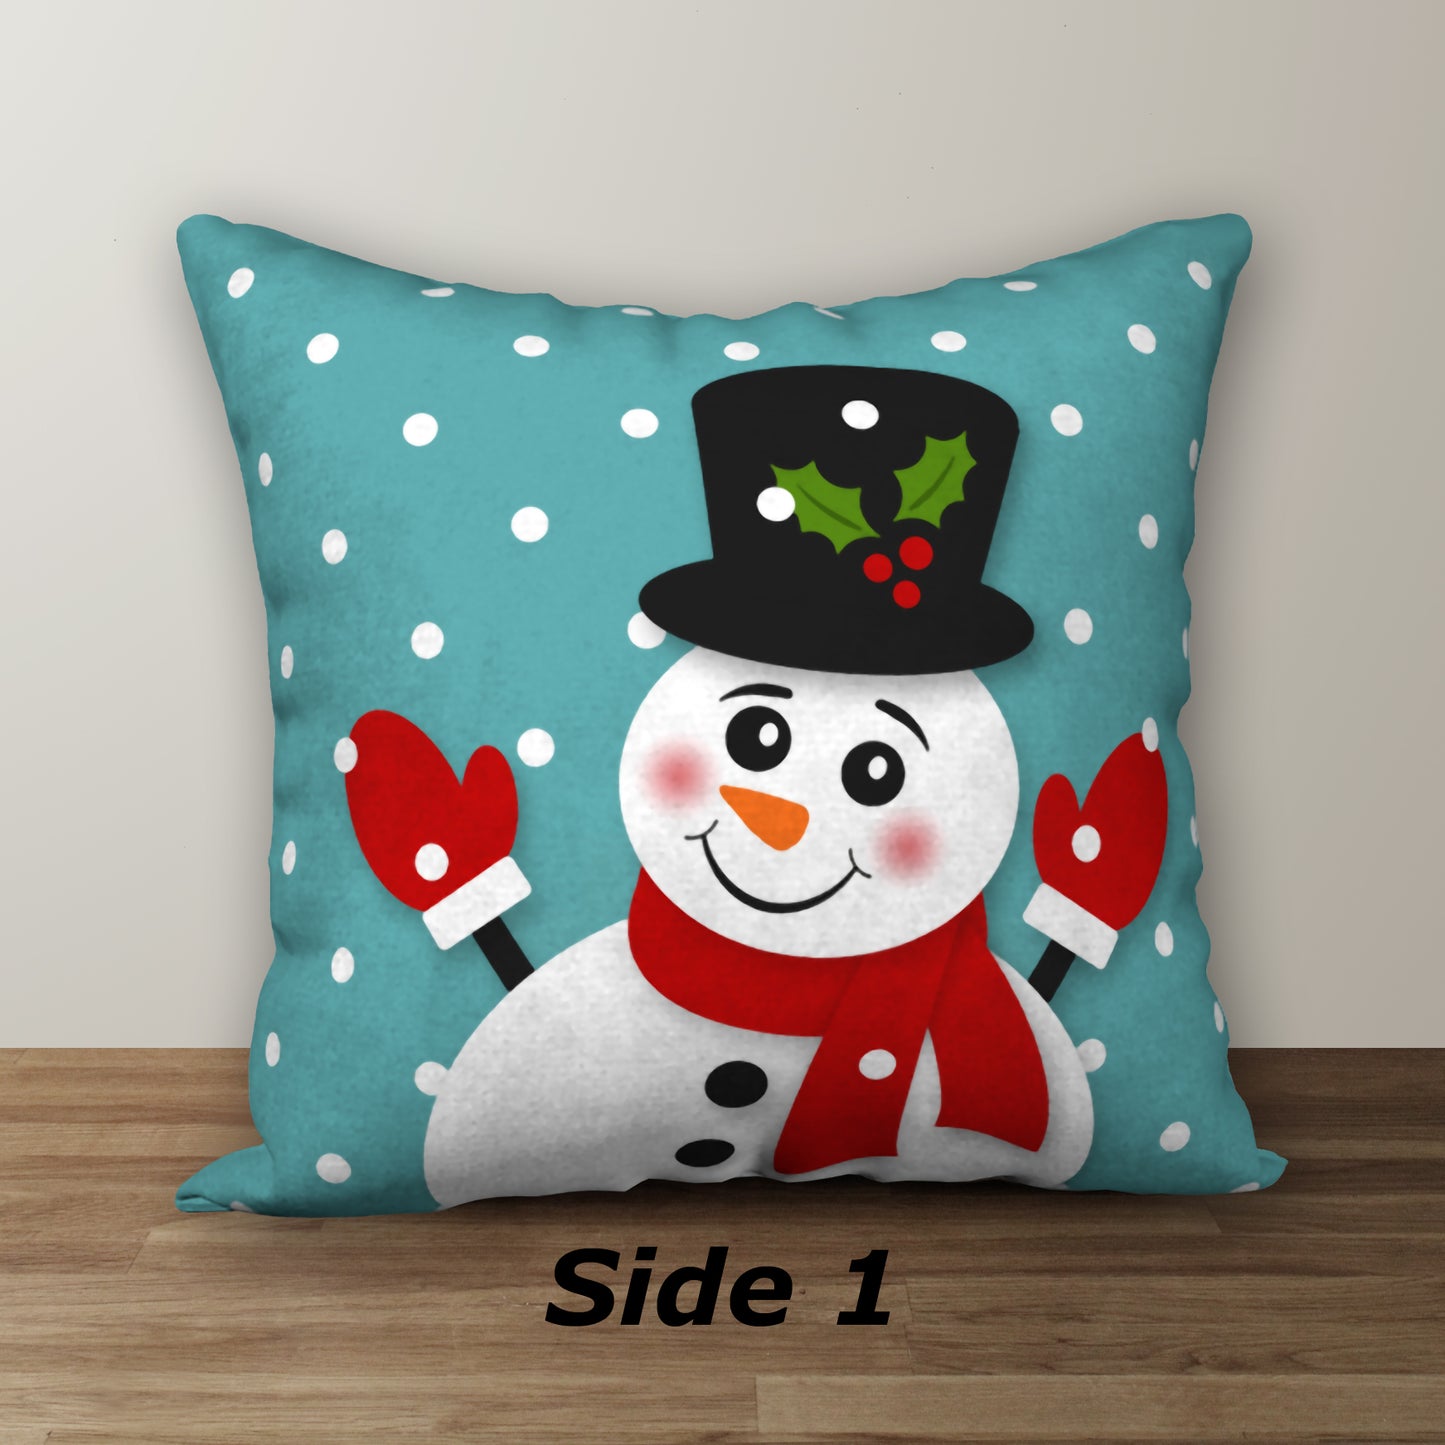 Top Hat Snowman Designer Holiday Pillow, 18"x18"